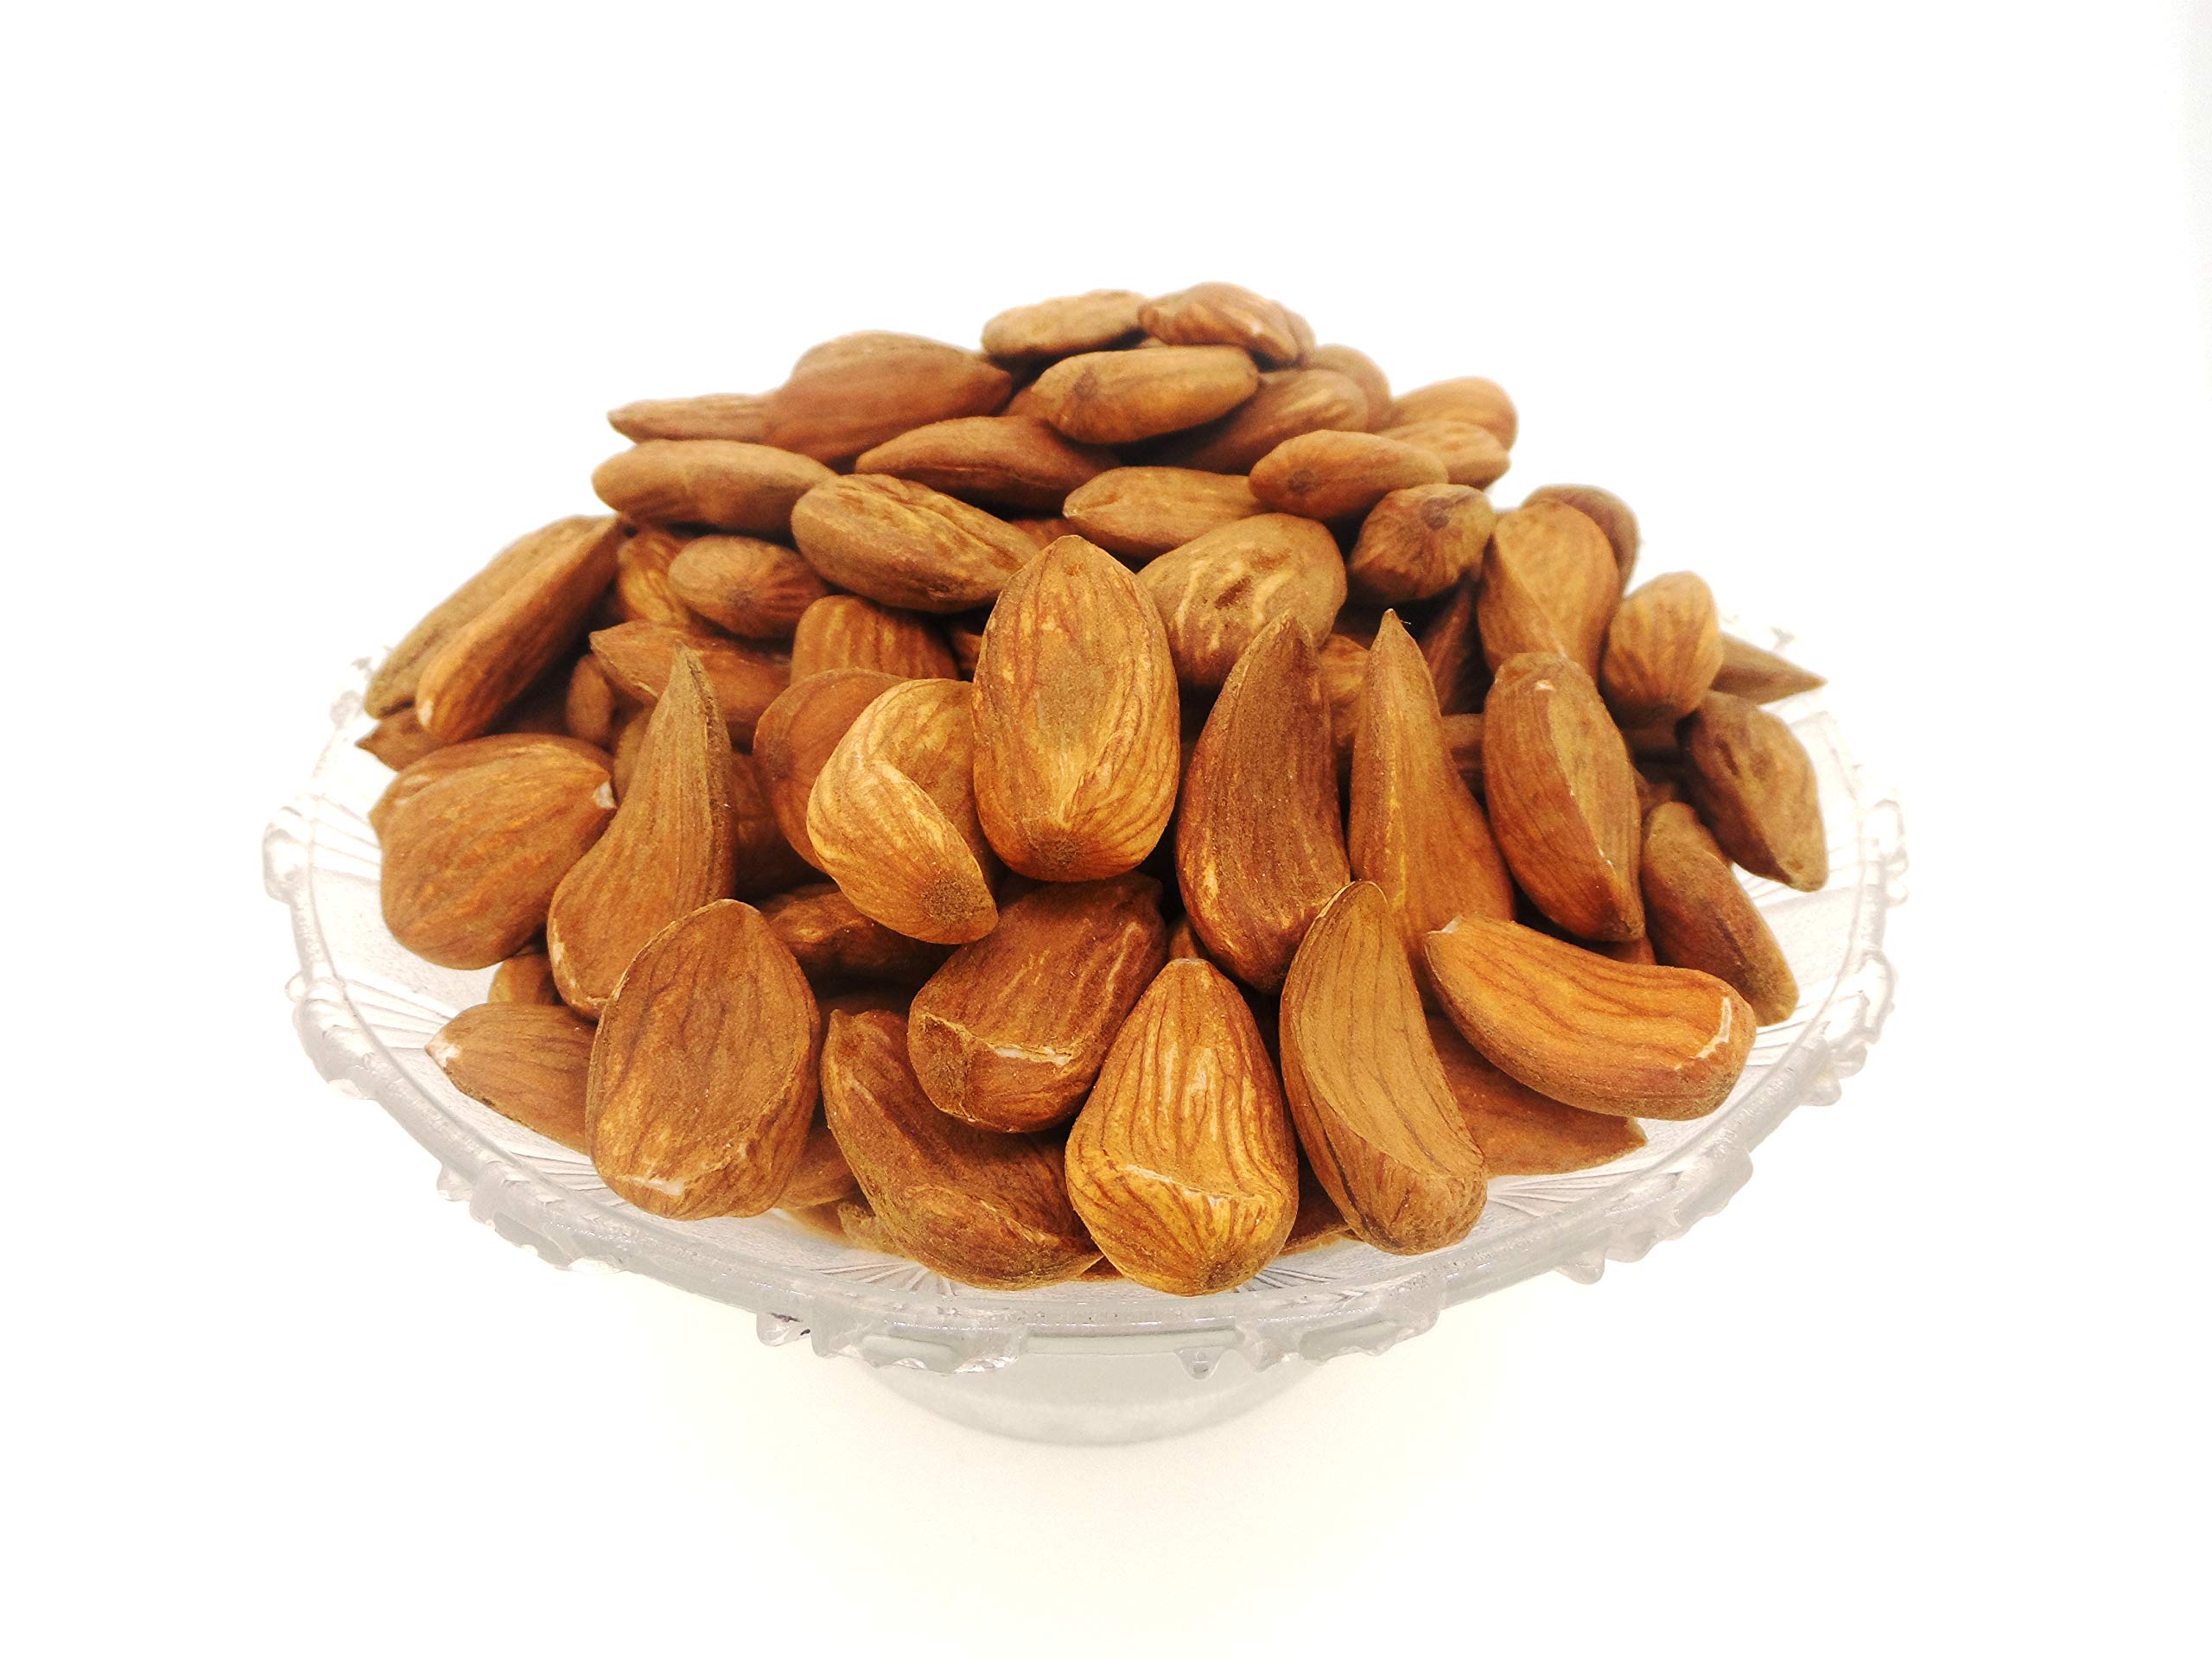 Characteristics of Mamra almond kernels